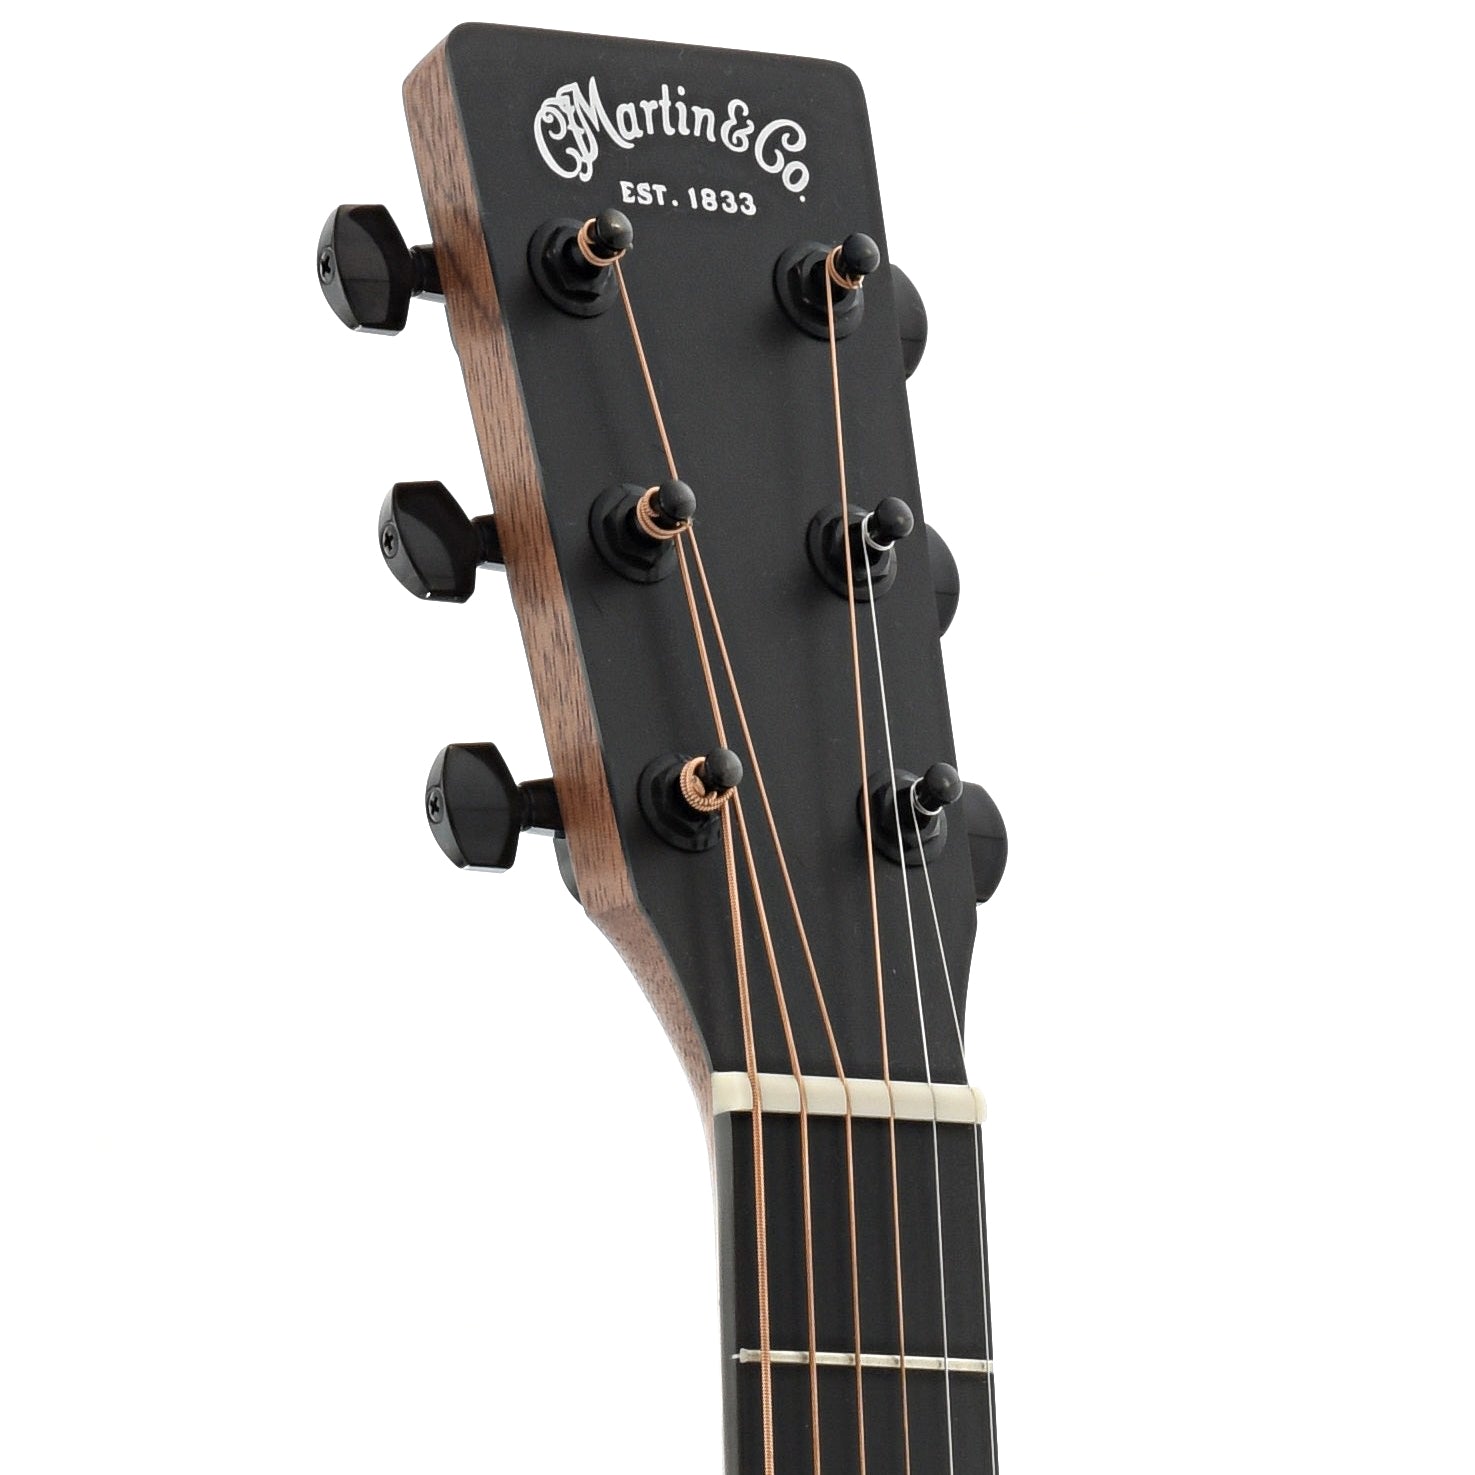 Martin u0026 Co EST.1833 アコースティックギター - ギター